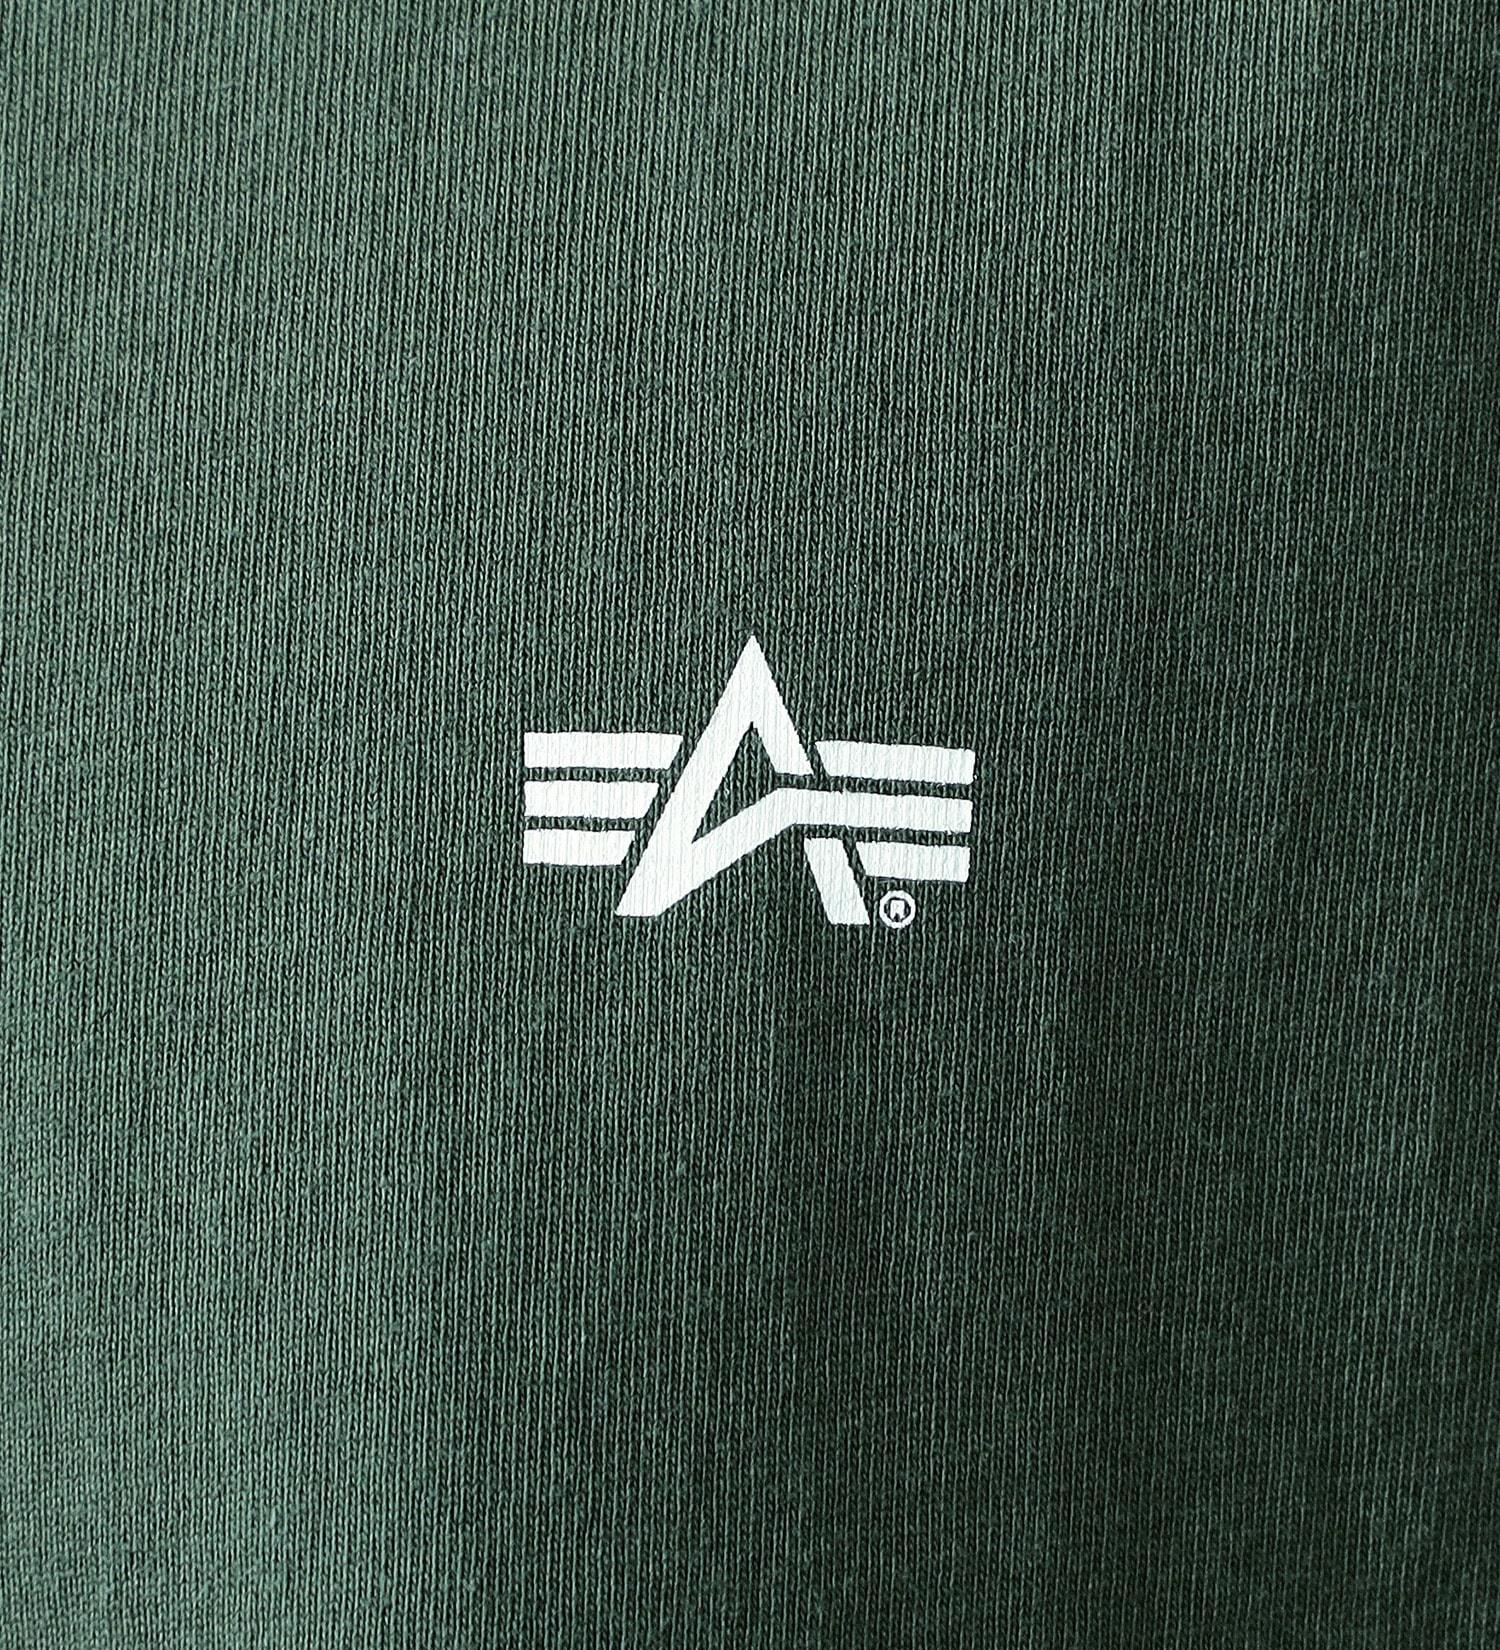 ALPHA(アルファ)の【おまとめ割対象】FLYING-Aマーク バックプリントTシャツ 半袖|トップス/Tシャツ/カットソー/メンズ|グリーン